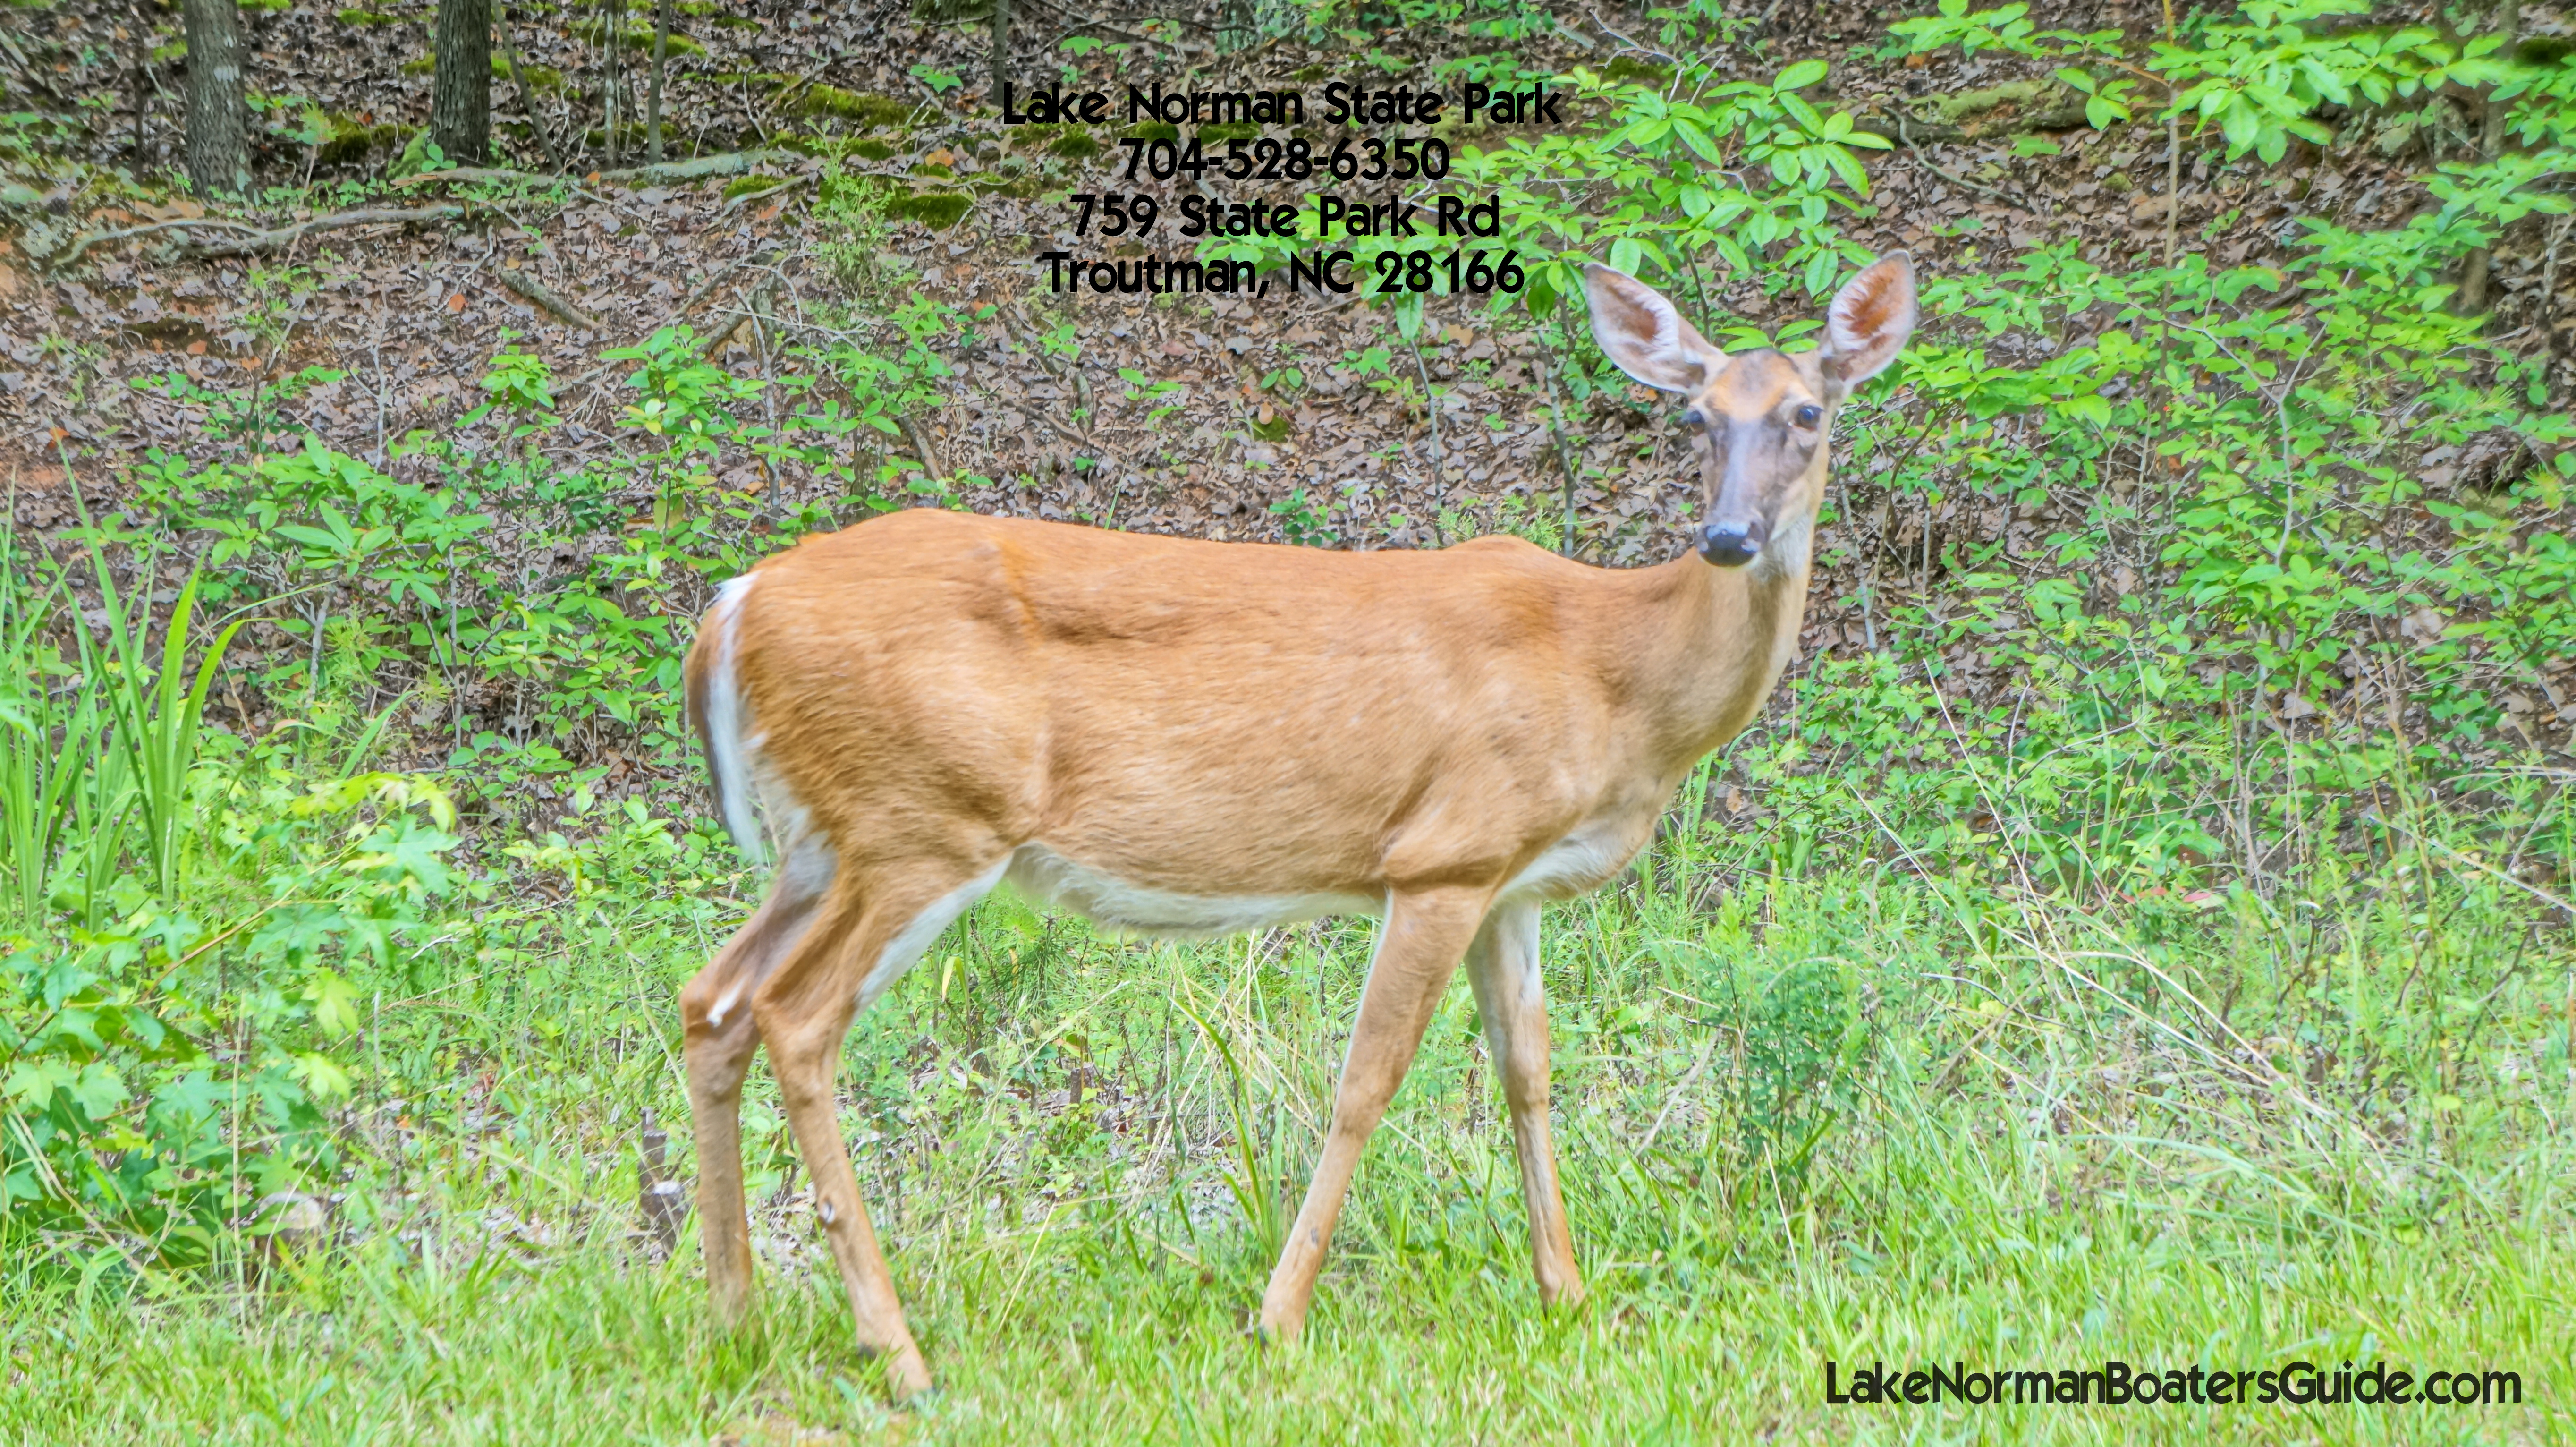 Deer at Lake Norman State Park